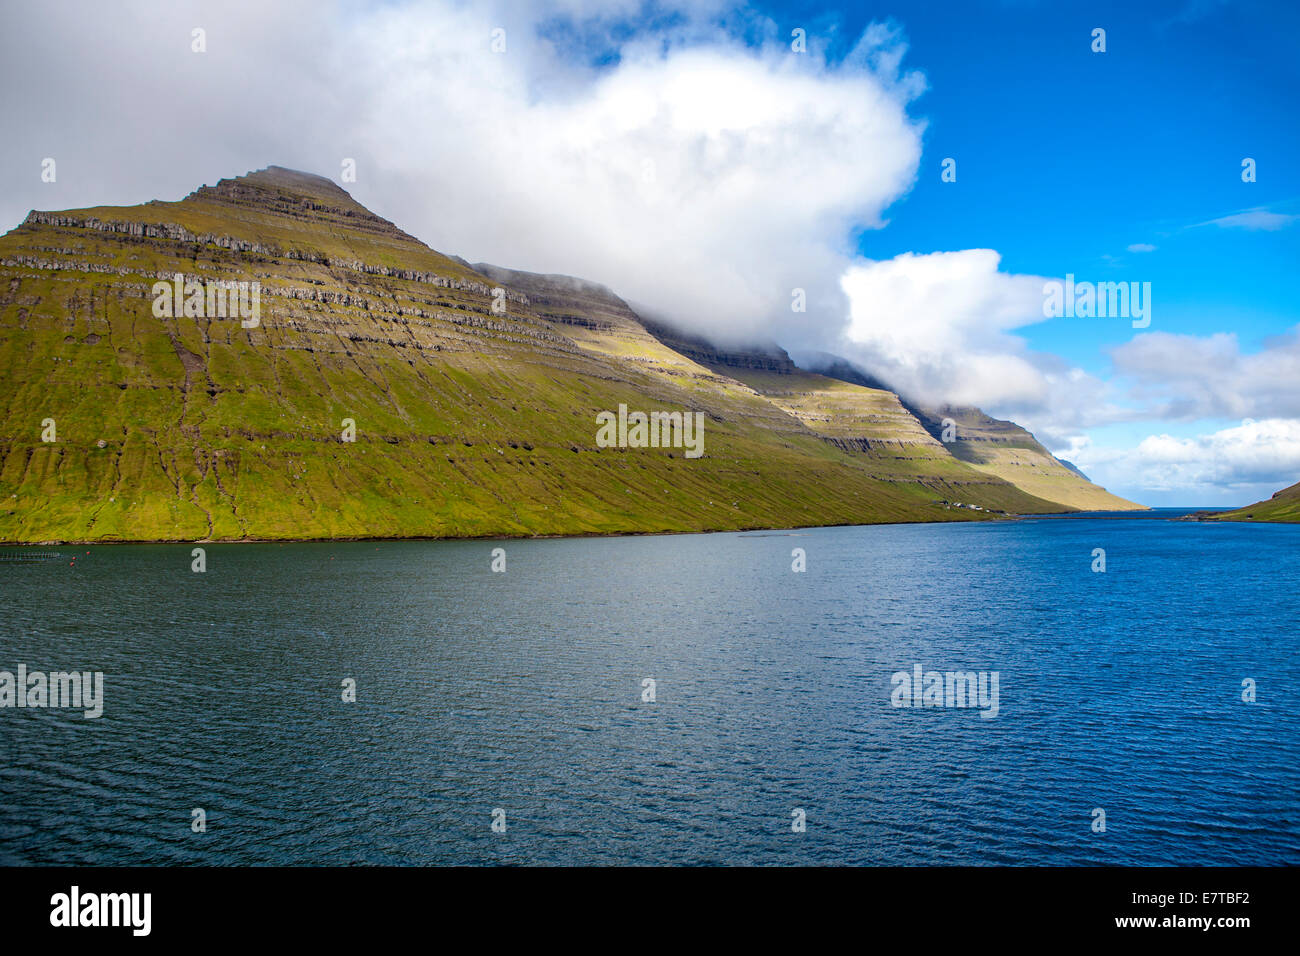 Landscape of part of the Faroe Islands near Klaksvik in the North Atlantic. Stock Photo